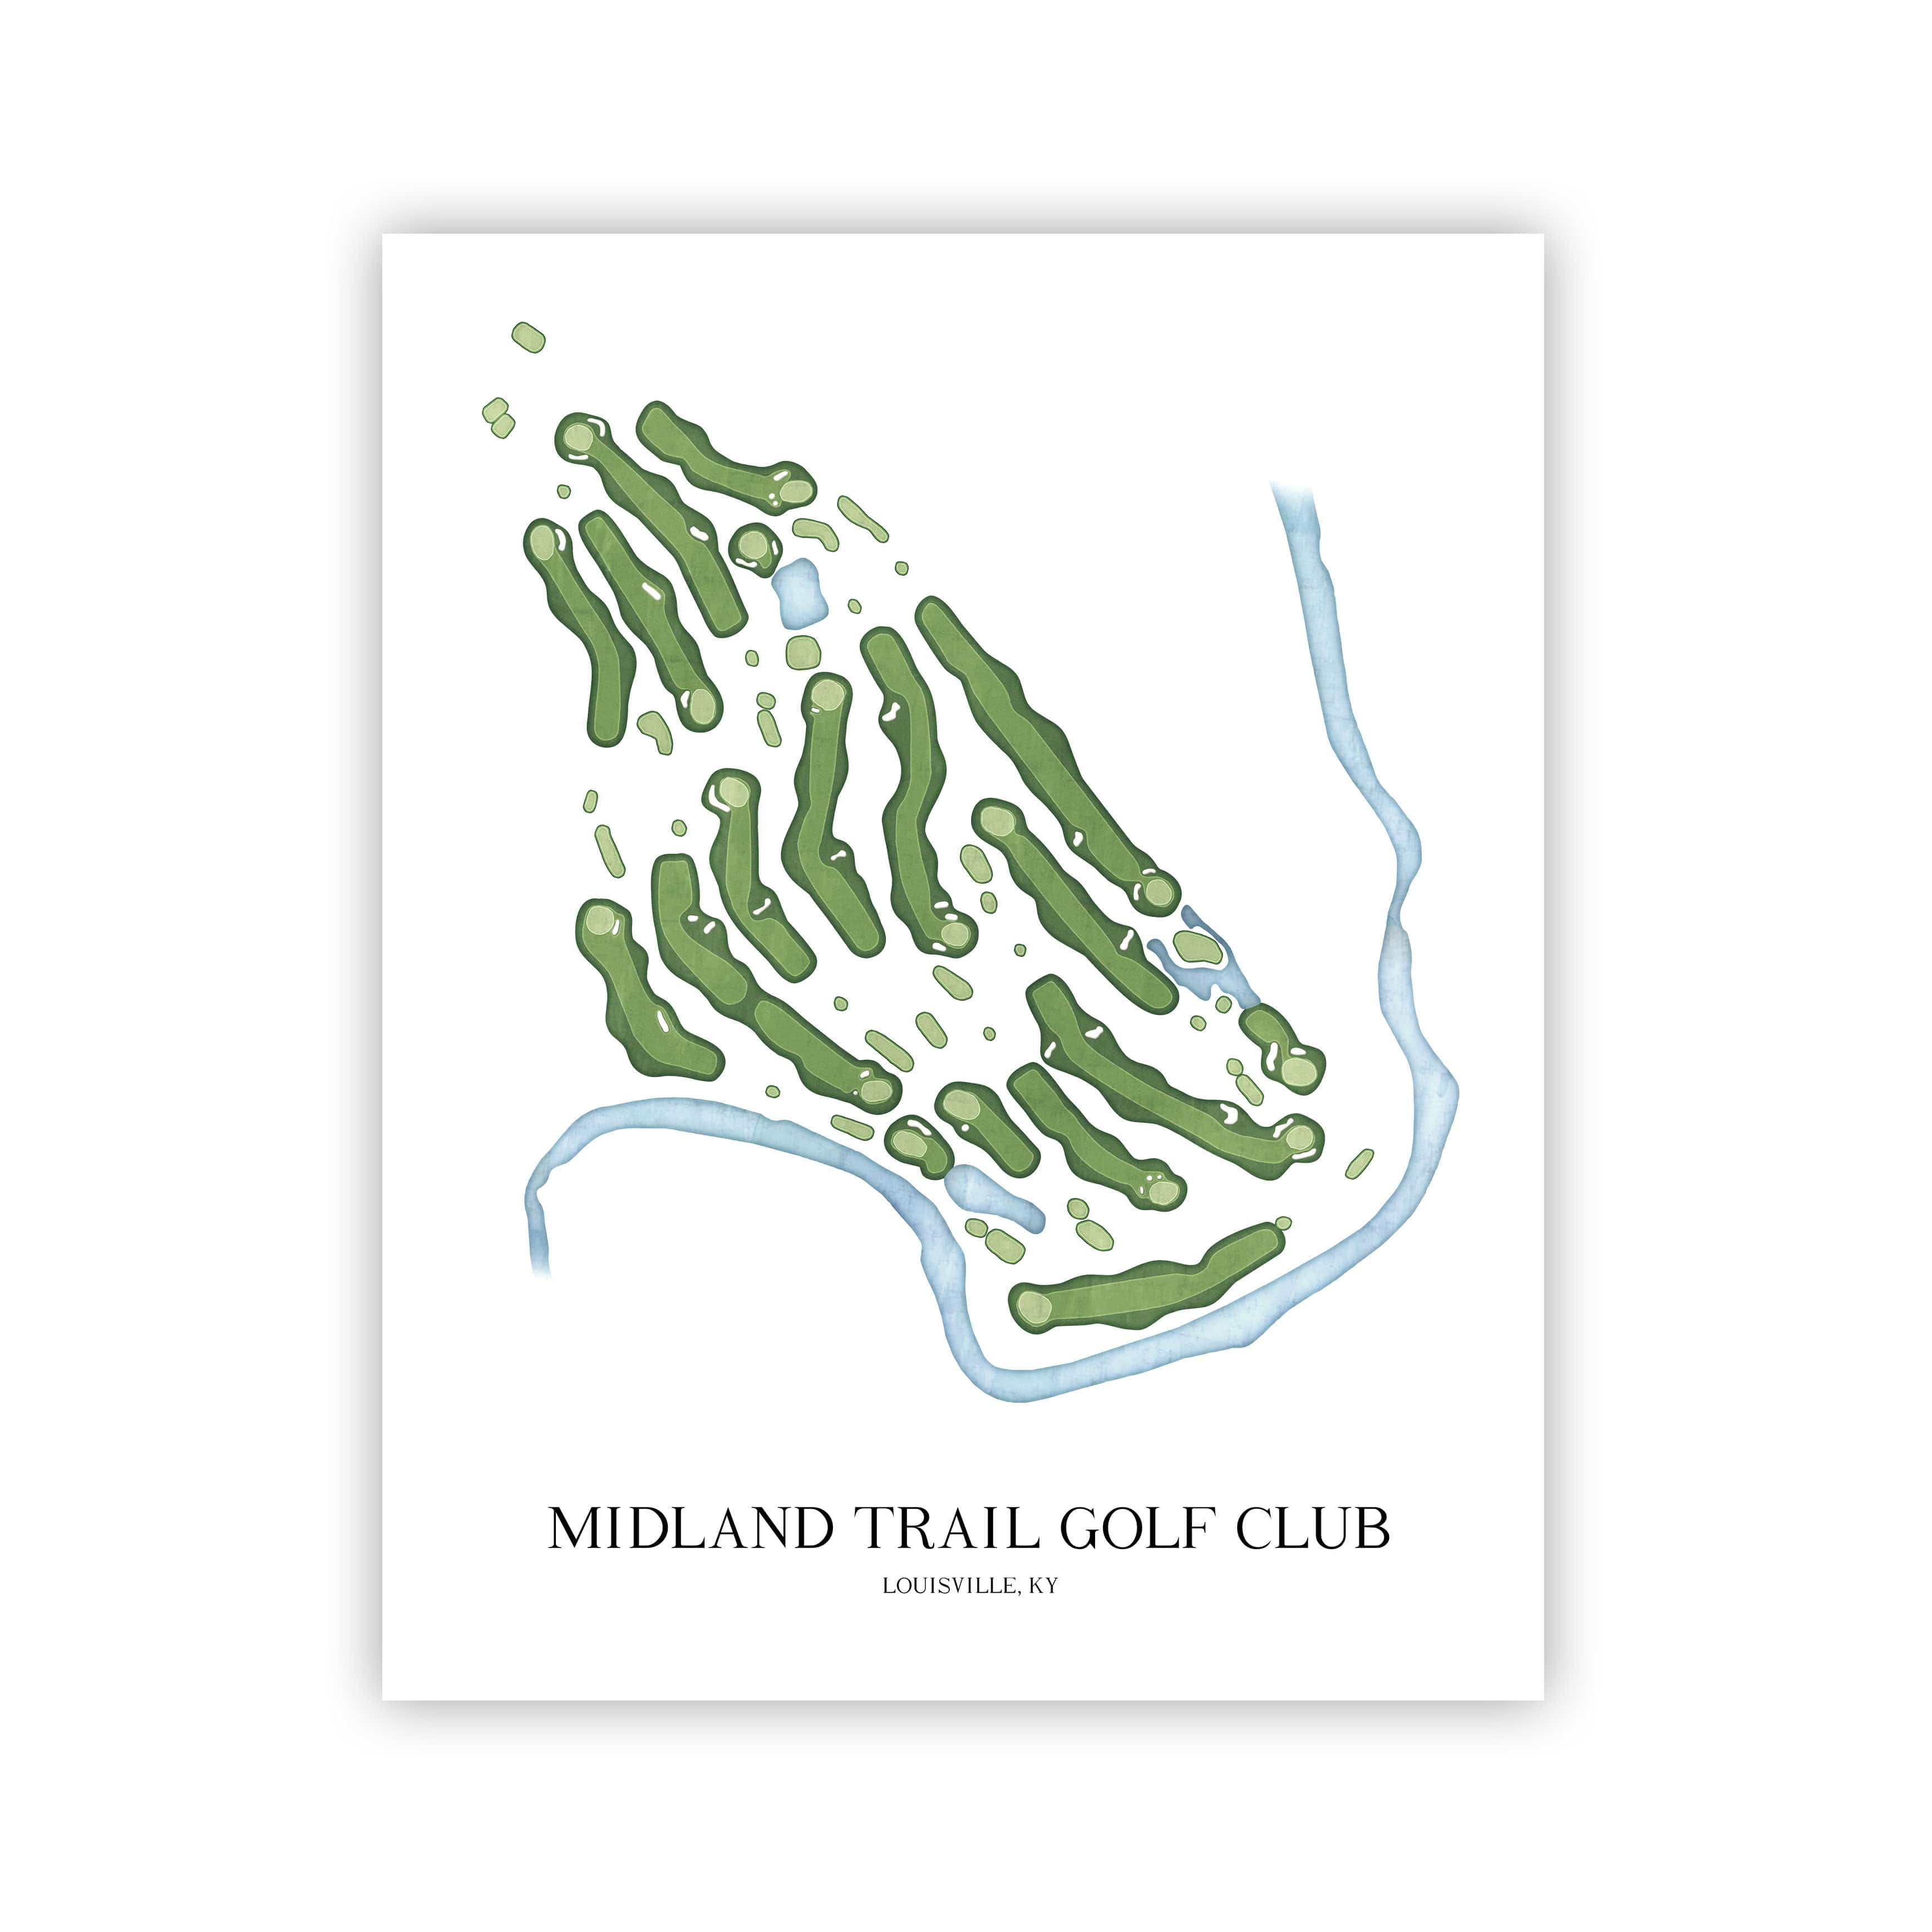 The 19th Hole Golf Shop - Golf Course Prints -  Midland Trail Golf Club Golf Course Map